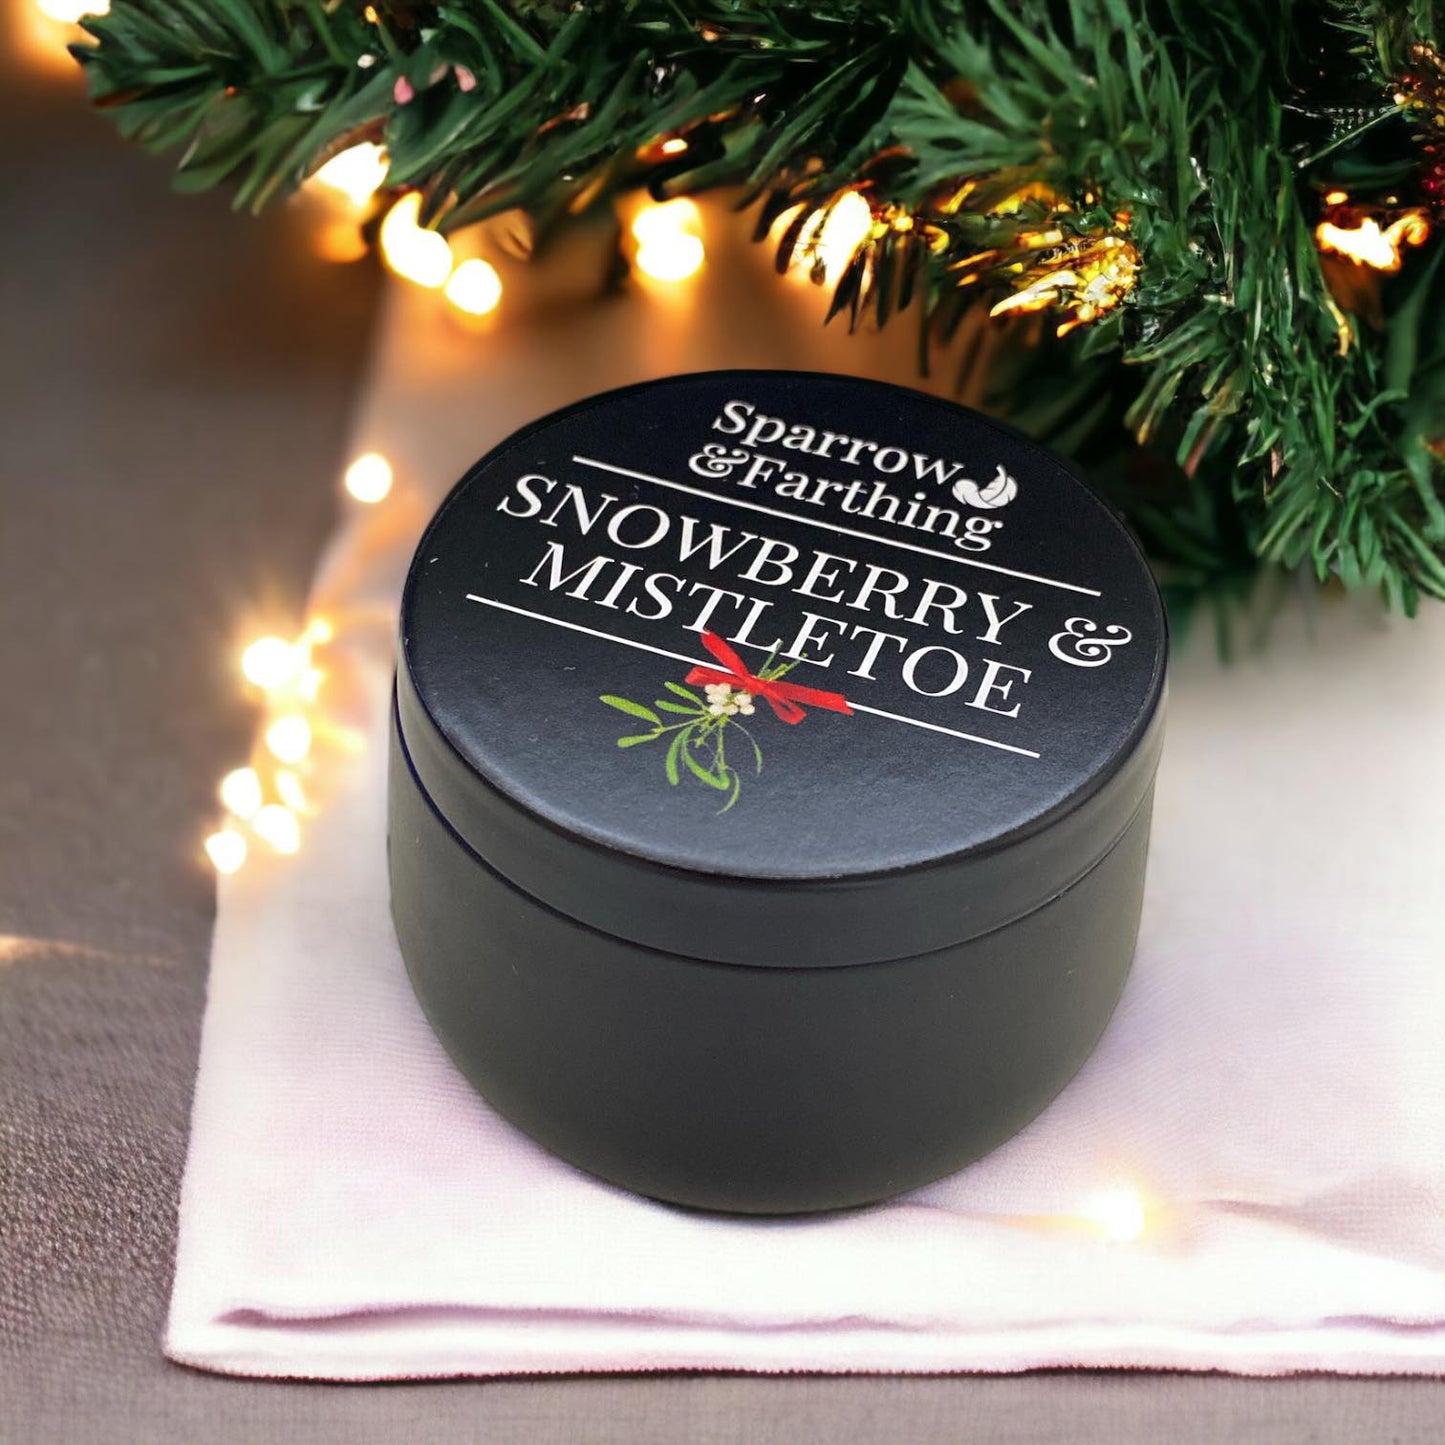 Snowberry & Mistletoe Candle